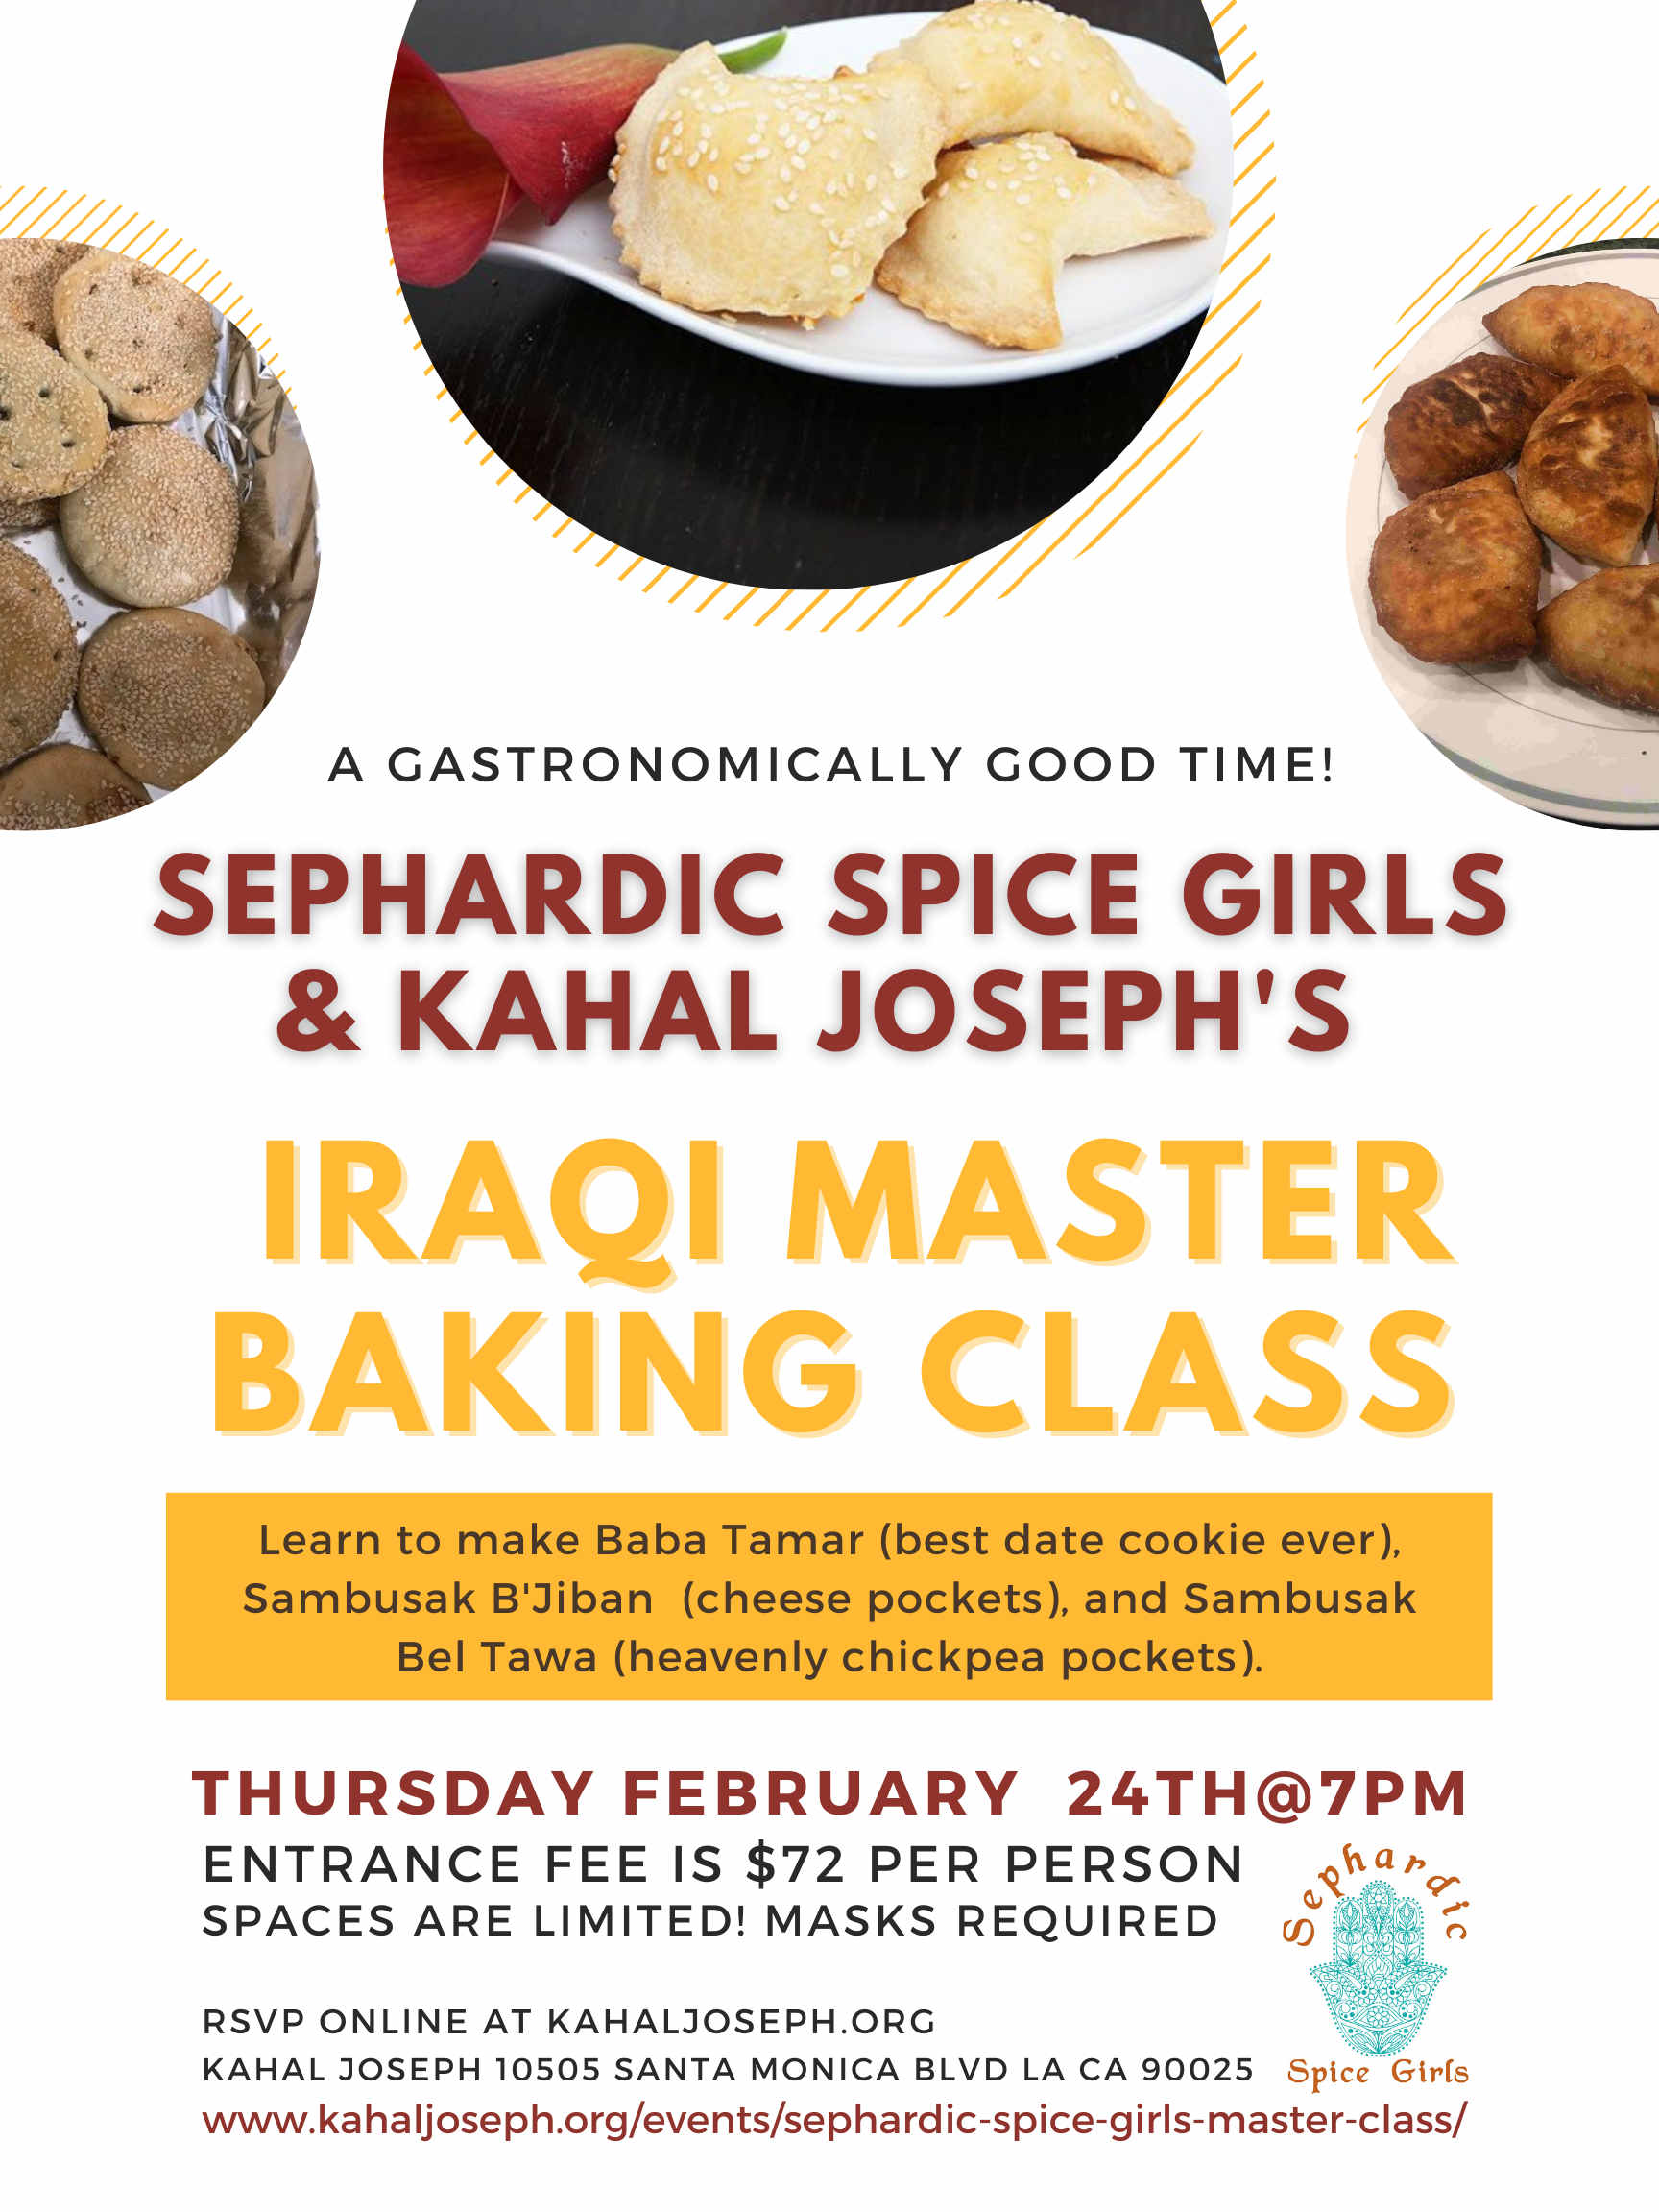 Sephardic Spice Girls Iraqi Baking Master Class